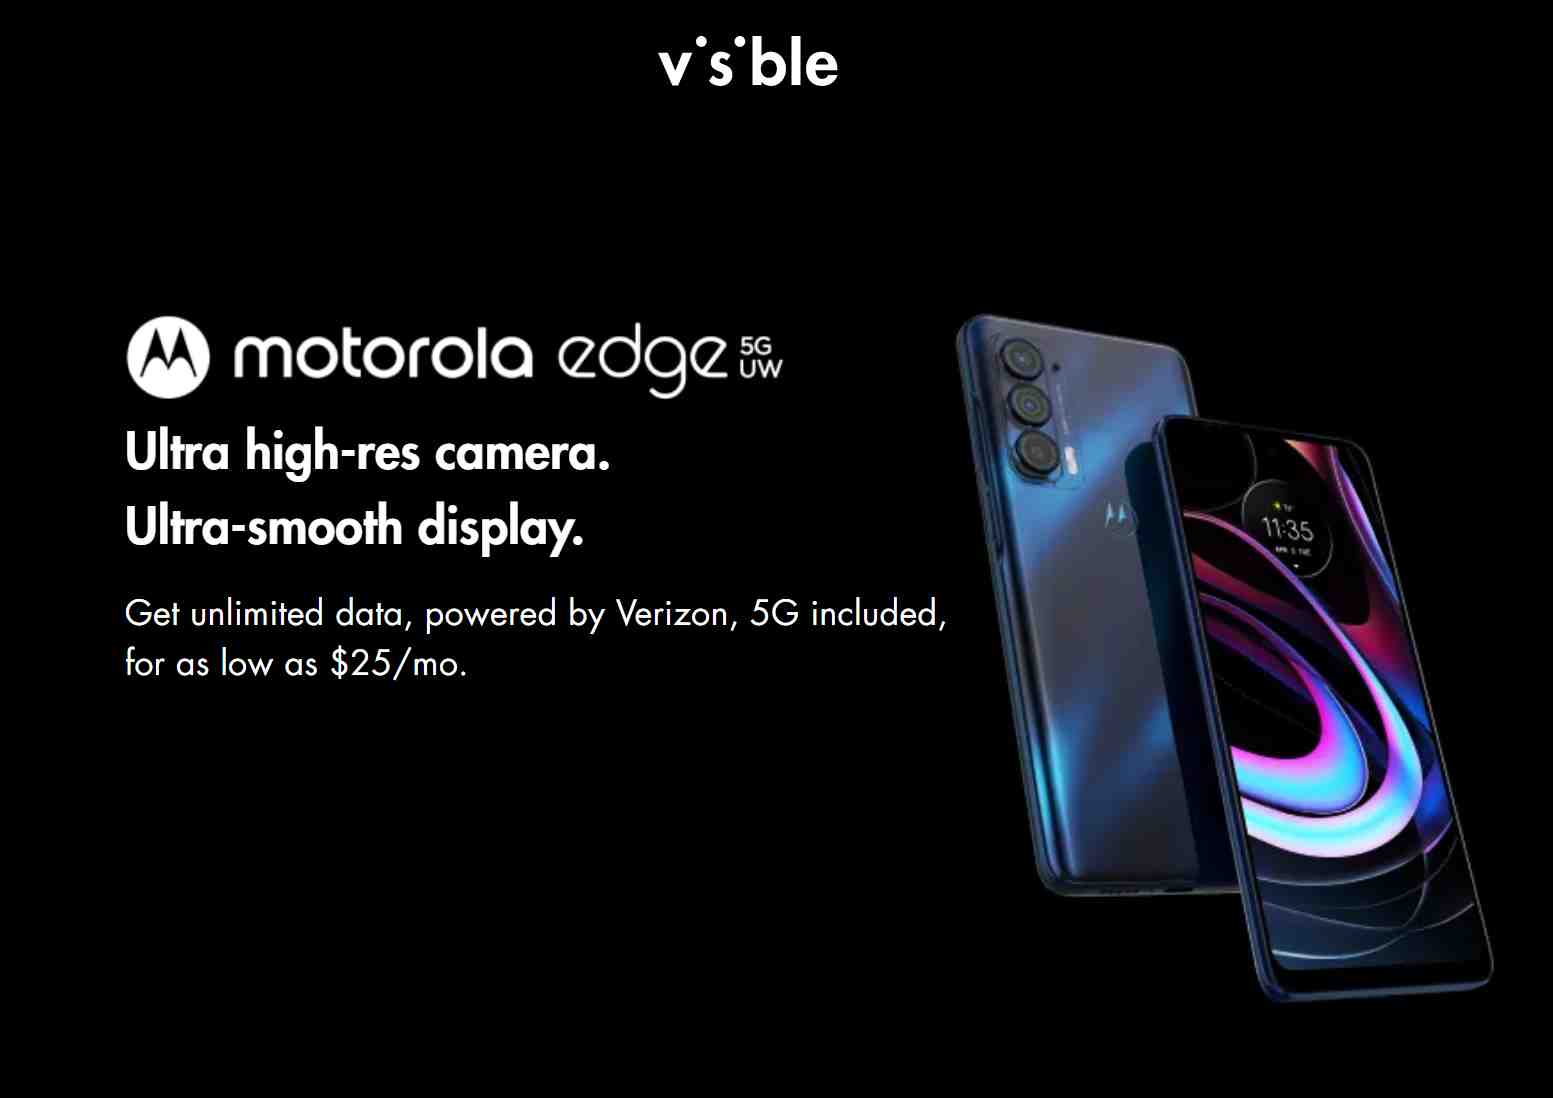 Visible Seven Day Motorola Flash Sale